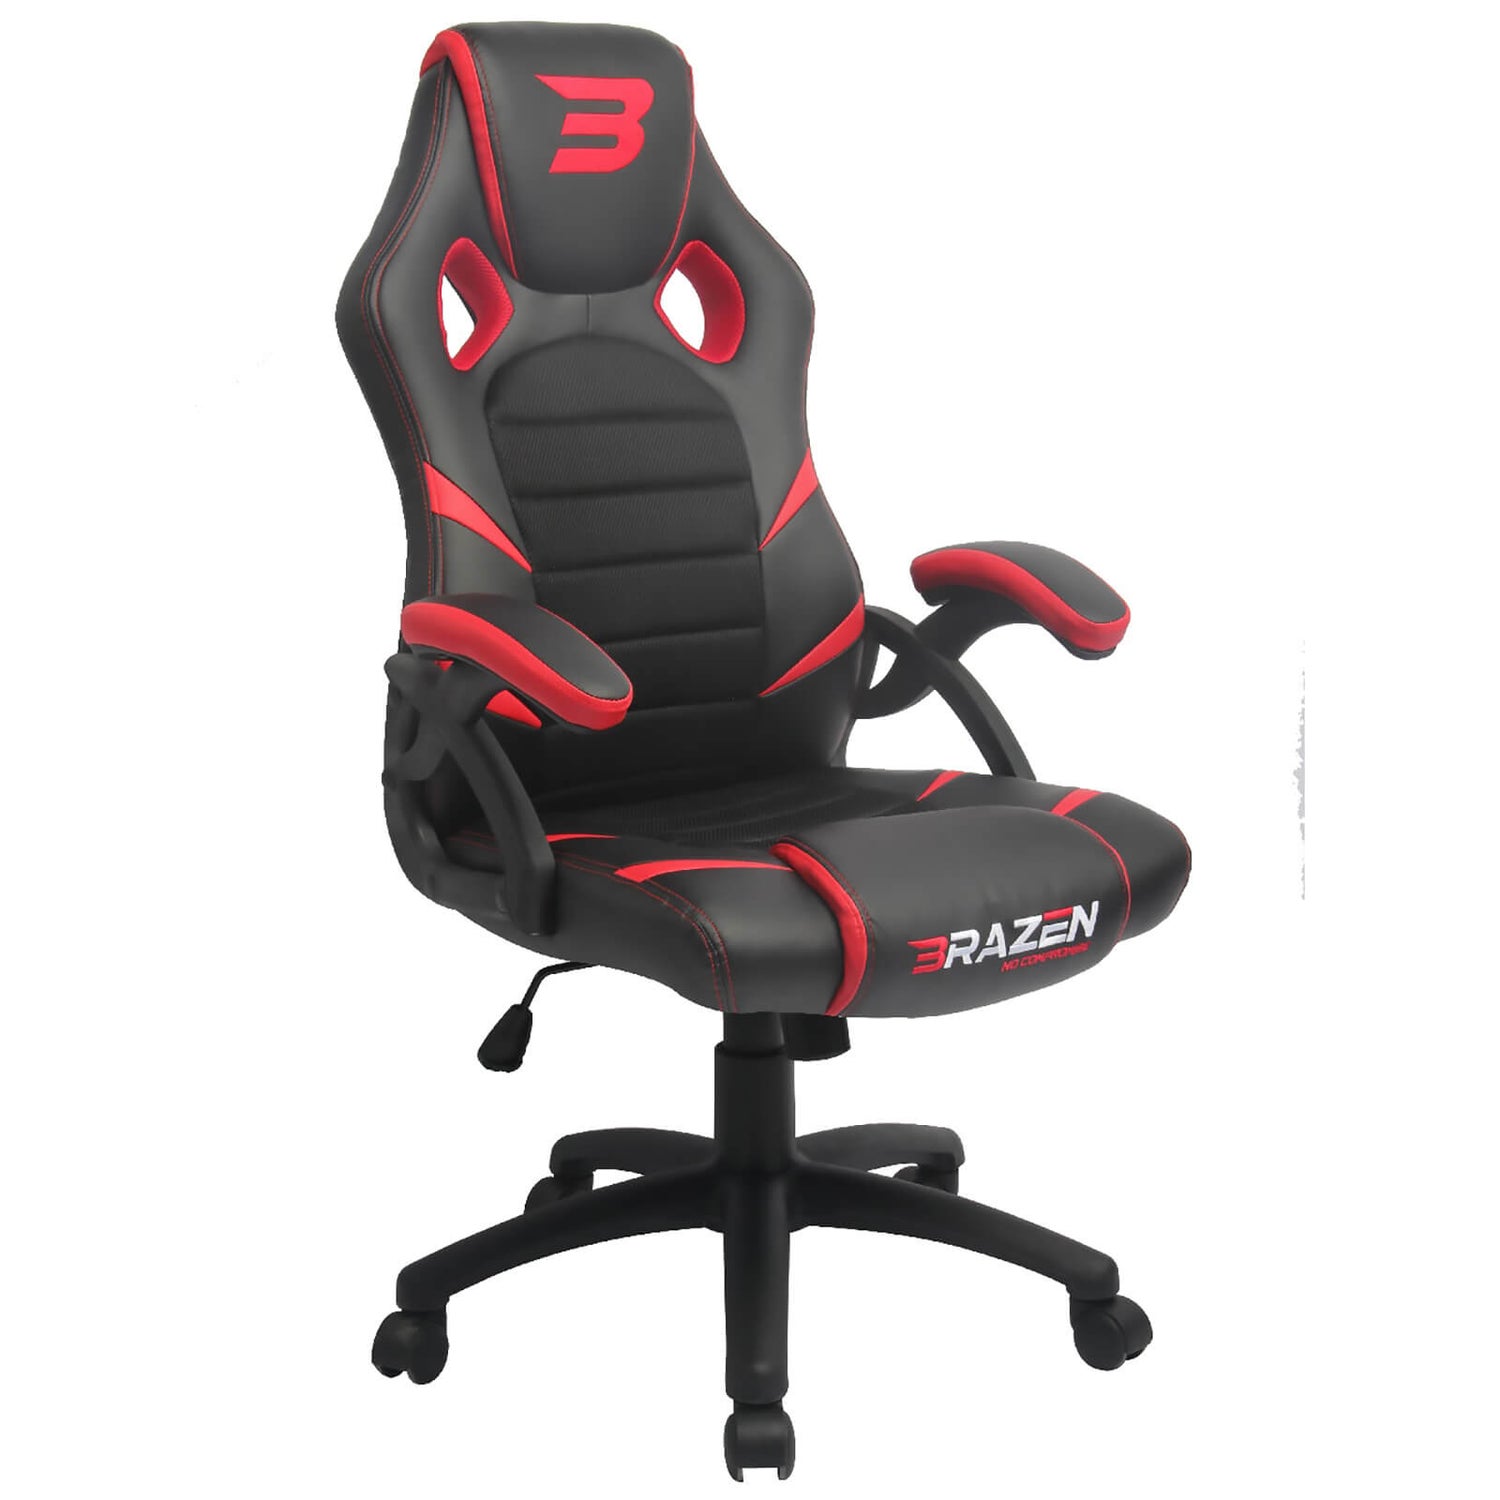 BraZen Puma PC Gaming Chair - Red